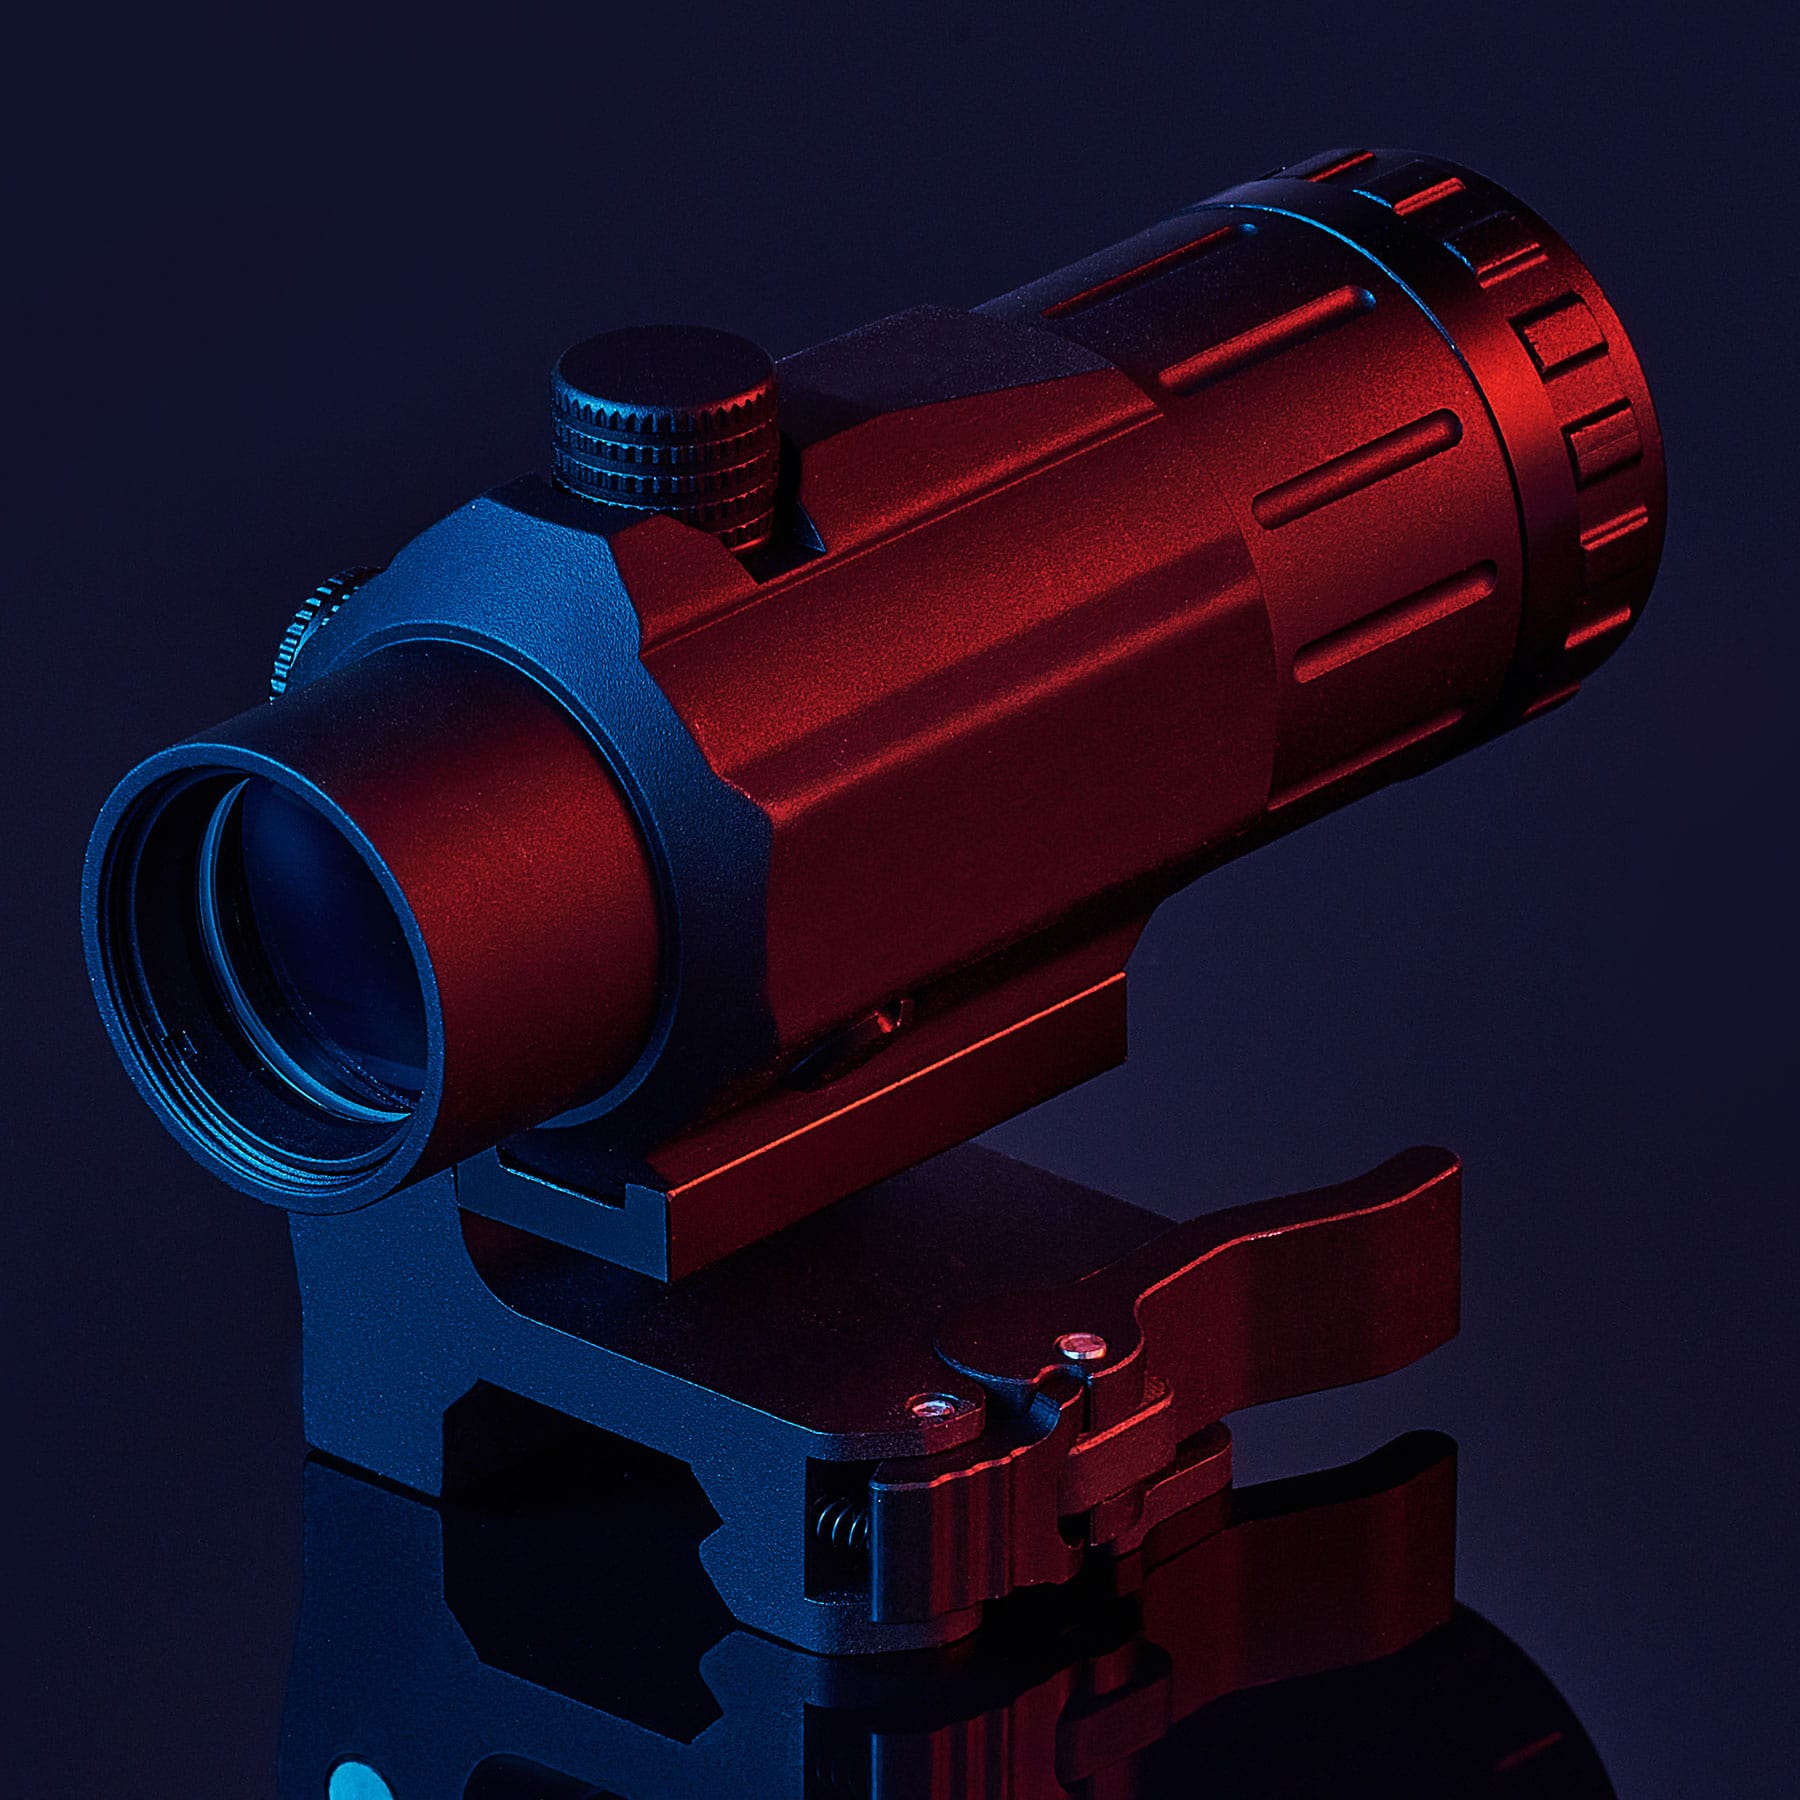 3x22 Reflex Sight Magnifier Gun Scope with Flip Mount, Picatinny Rails